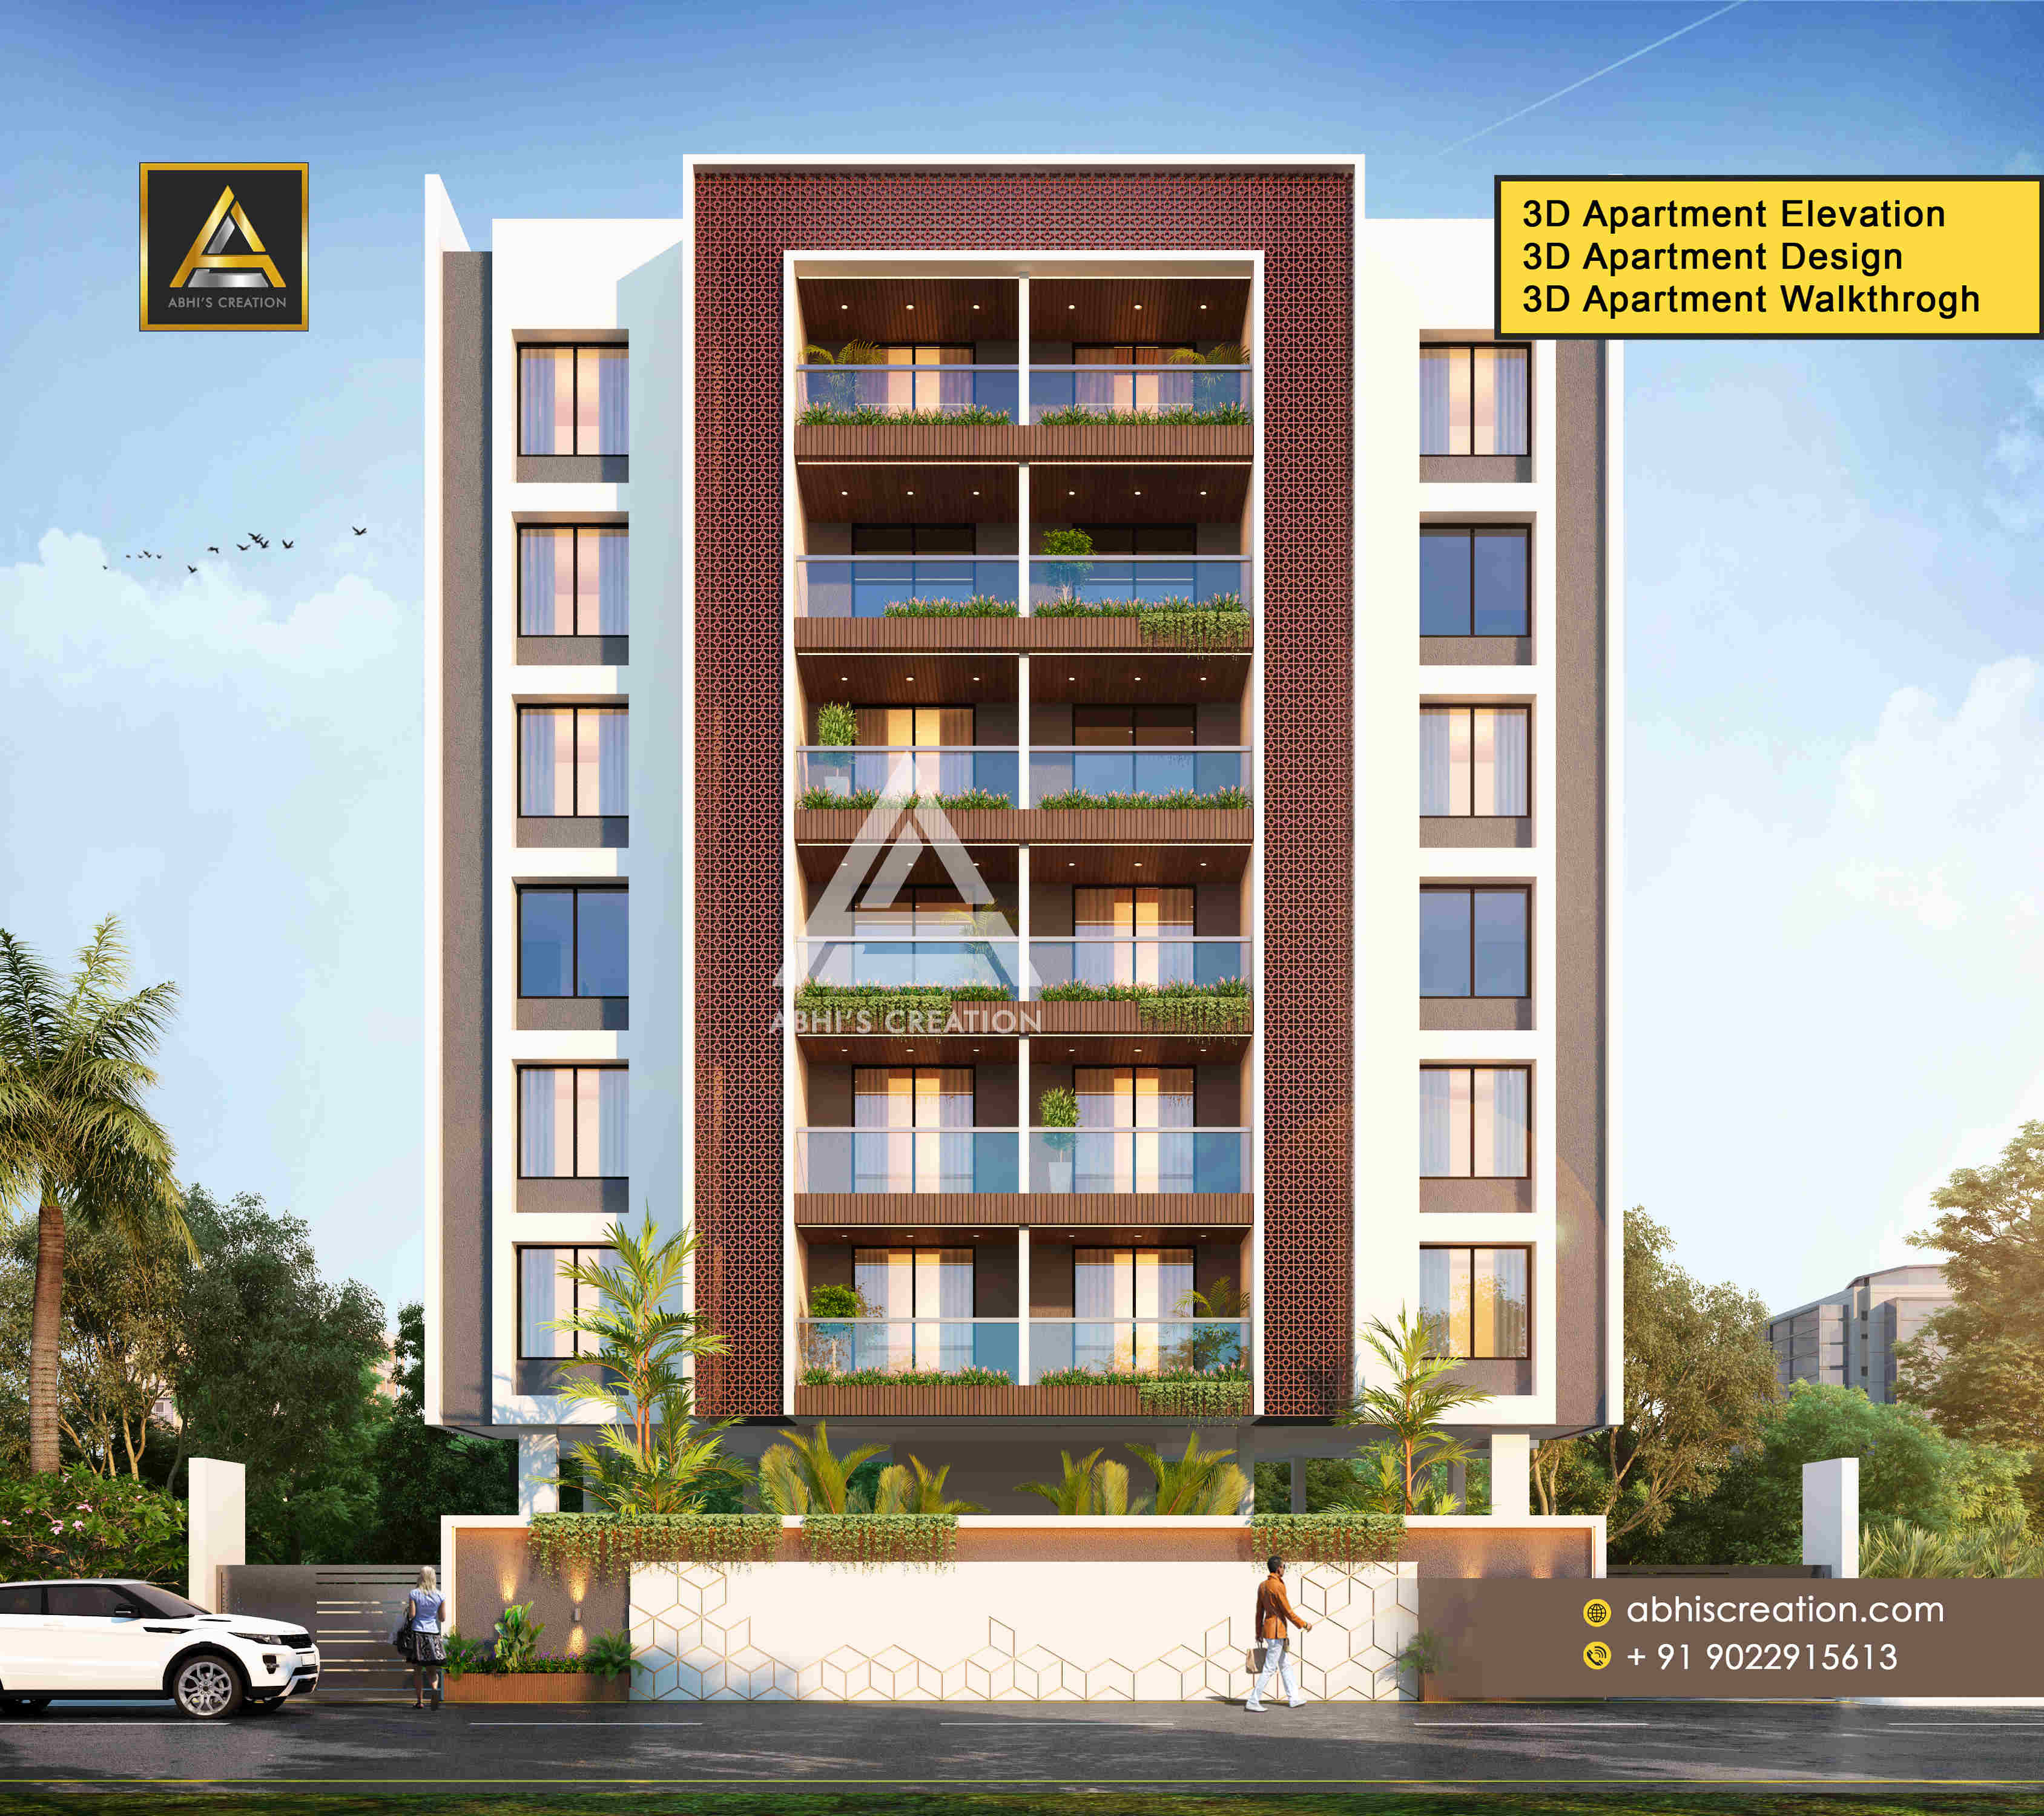 3d-rendering-services-abhis-creation-dream-apartment-exterior-design-elevation.jpg